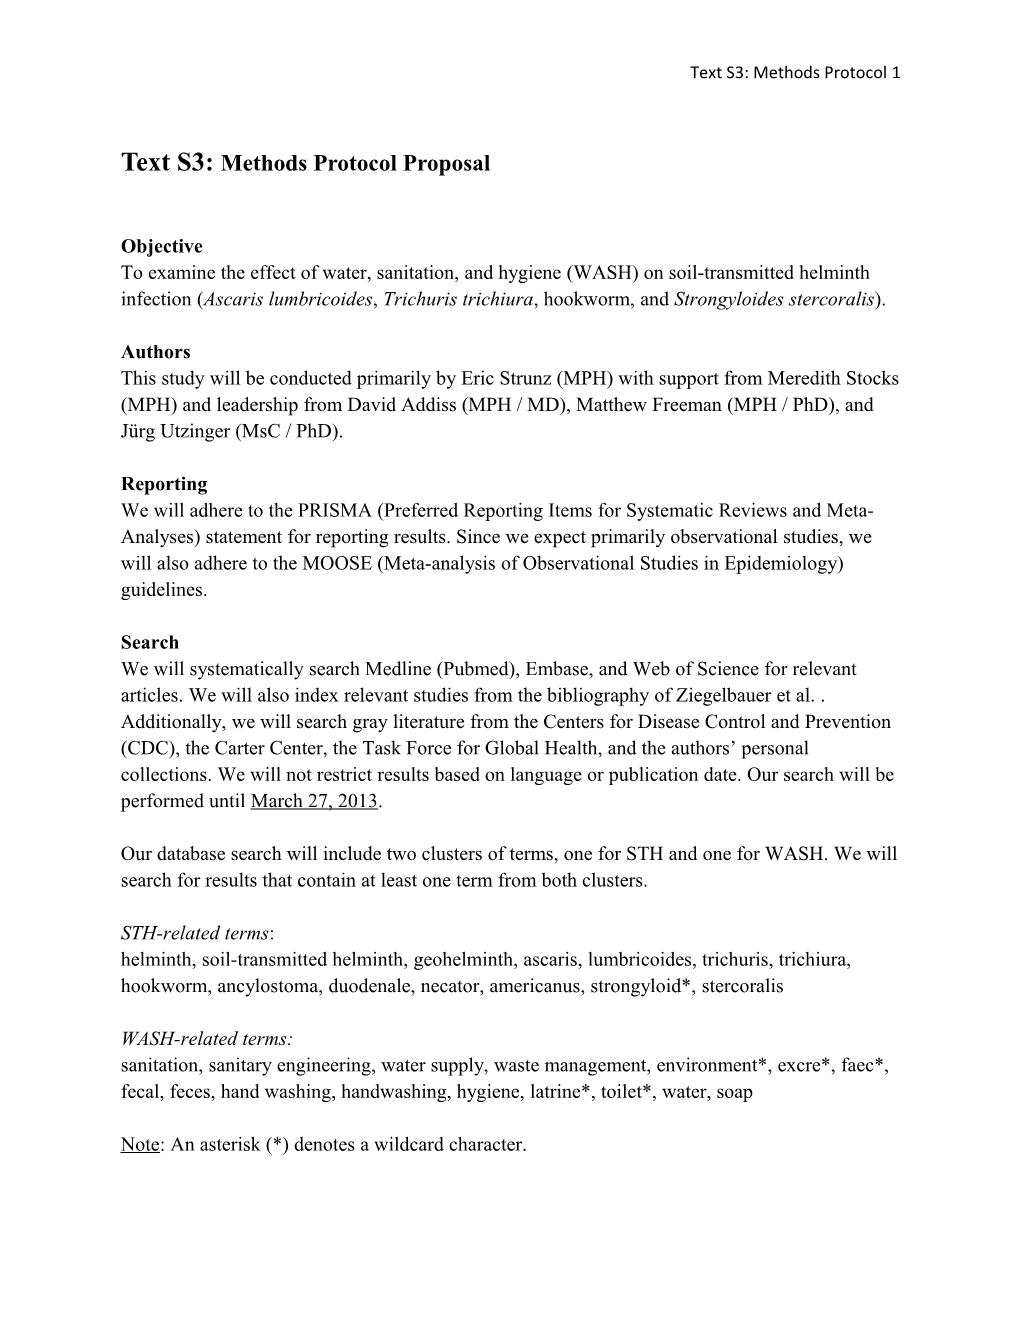 Text S3: Methods Protocol Proposal